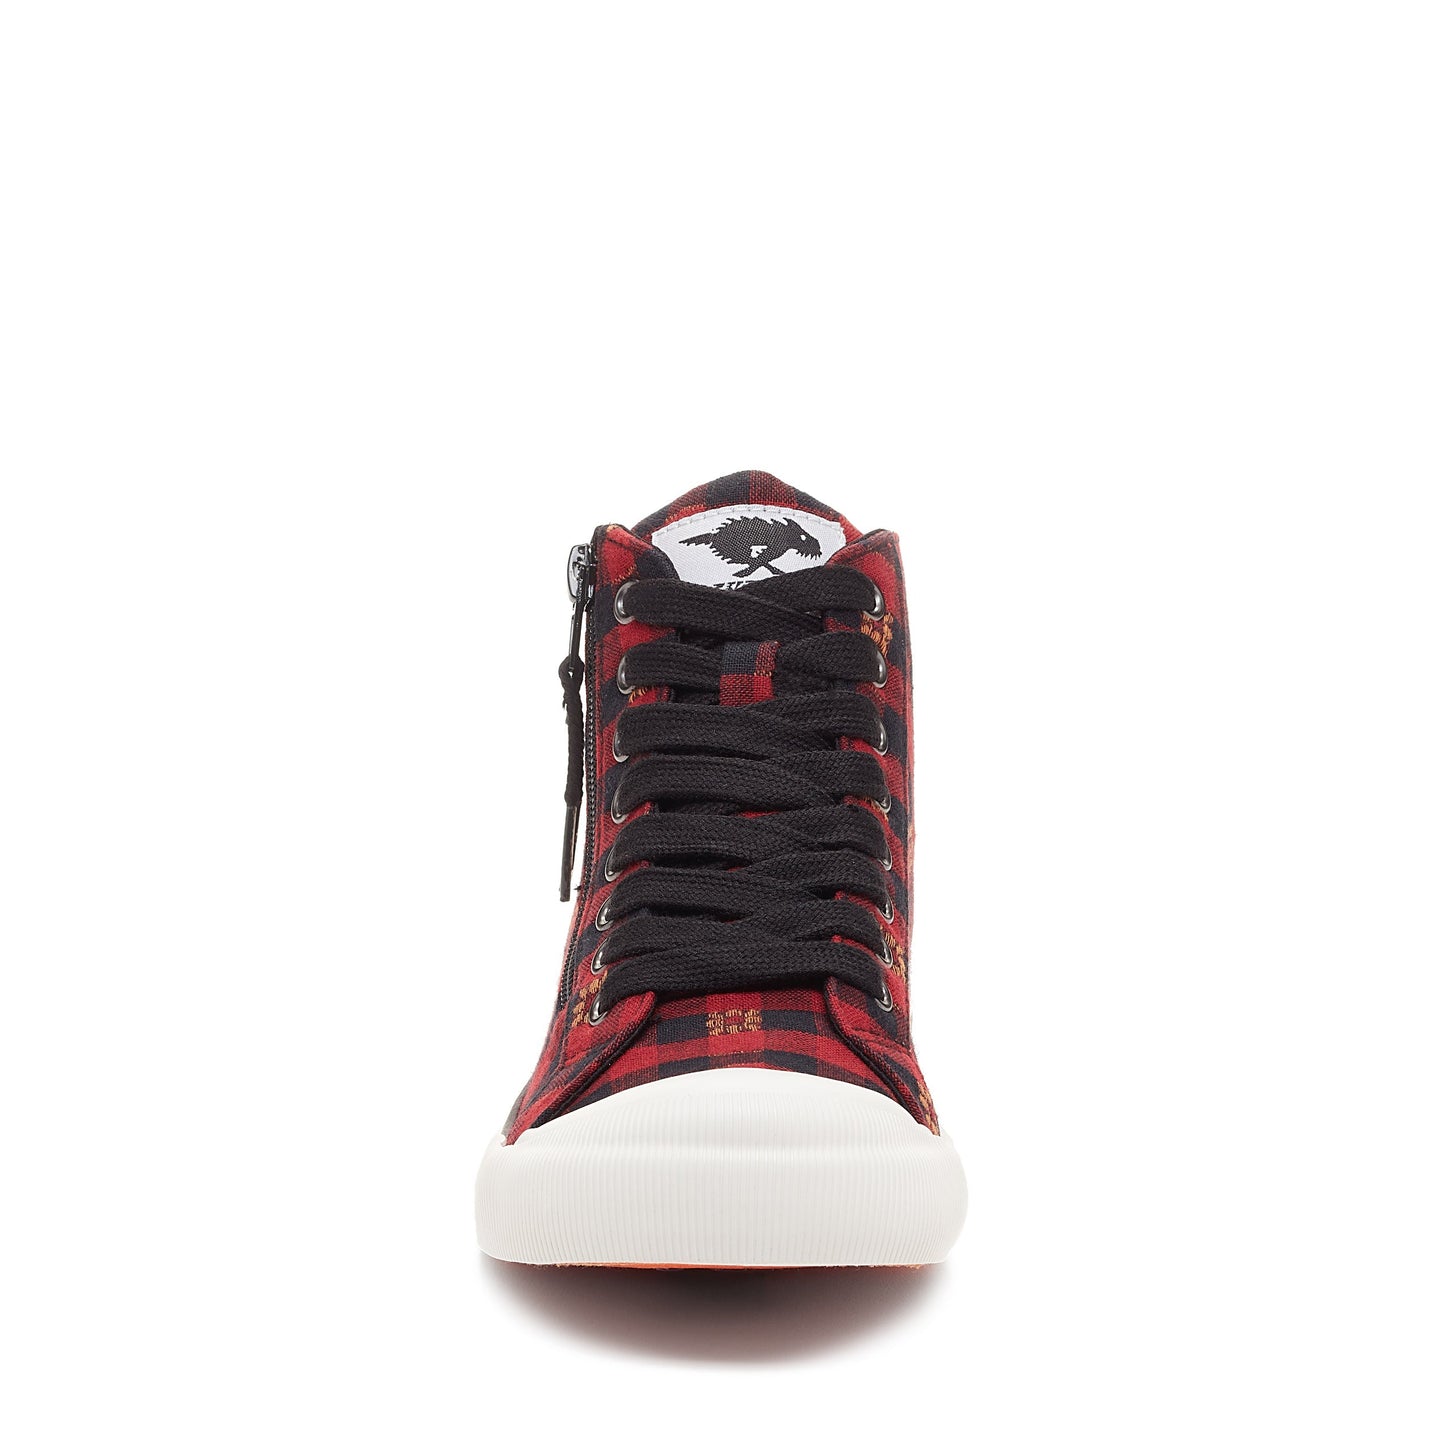 Rocket Dog® Jazzin Red Plaid Floral High Top Sneaker